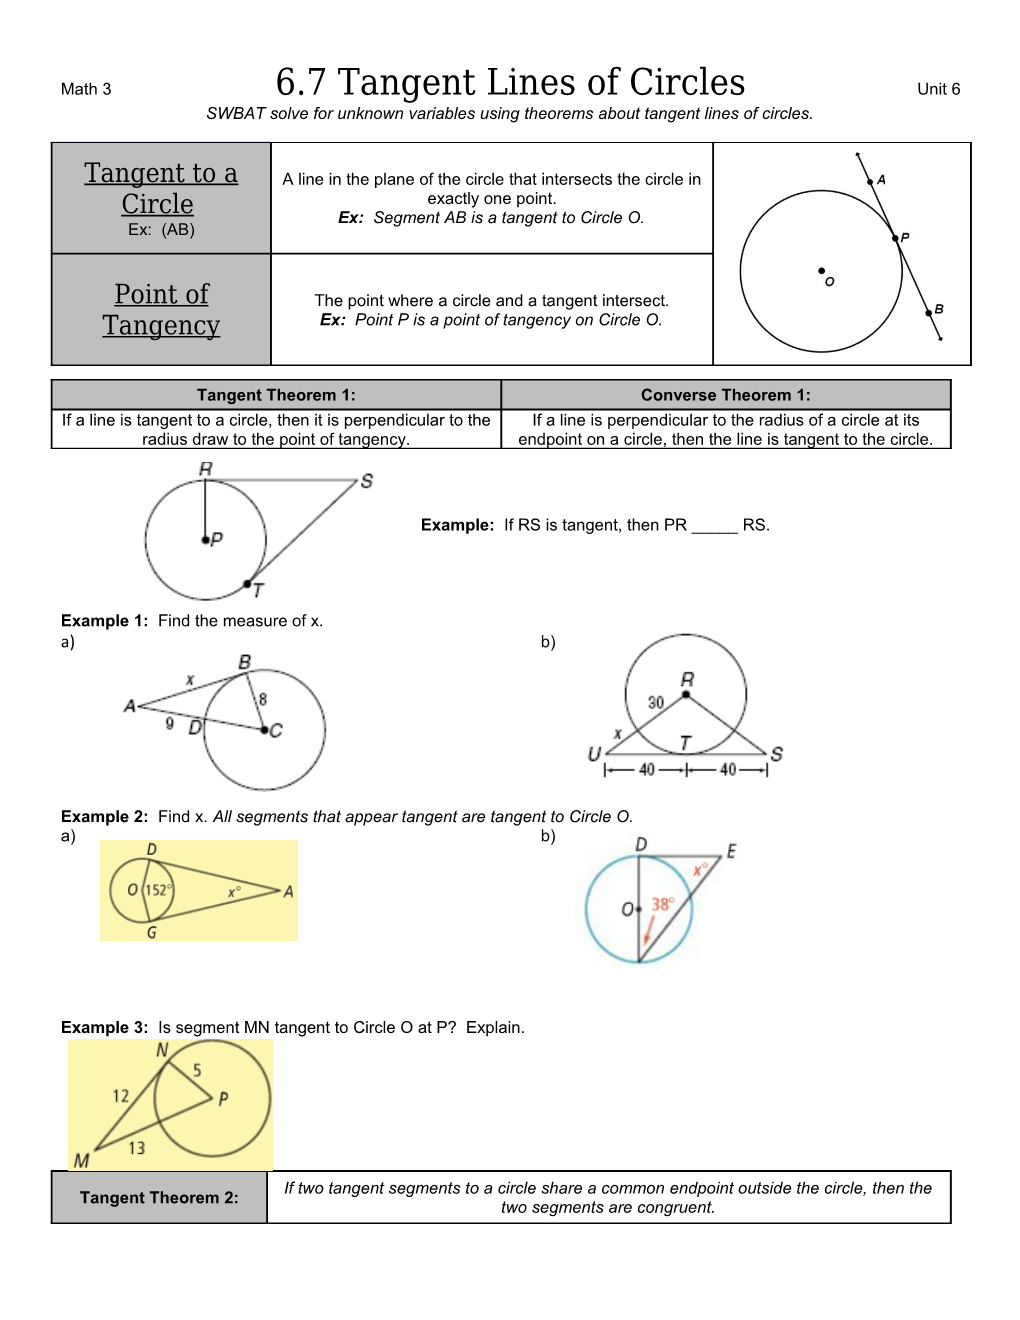 Math 36.7 Tangent Lines of Circlesunit 6